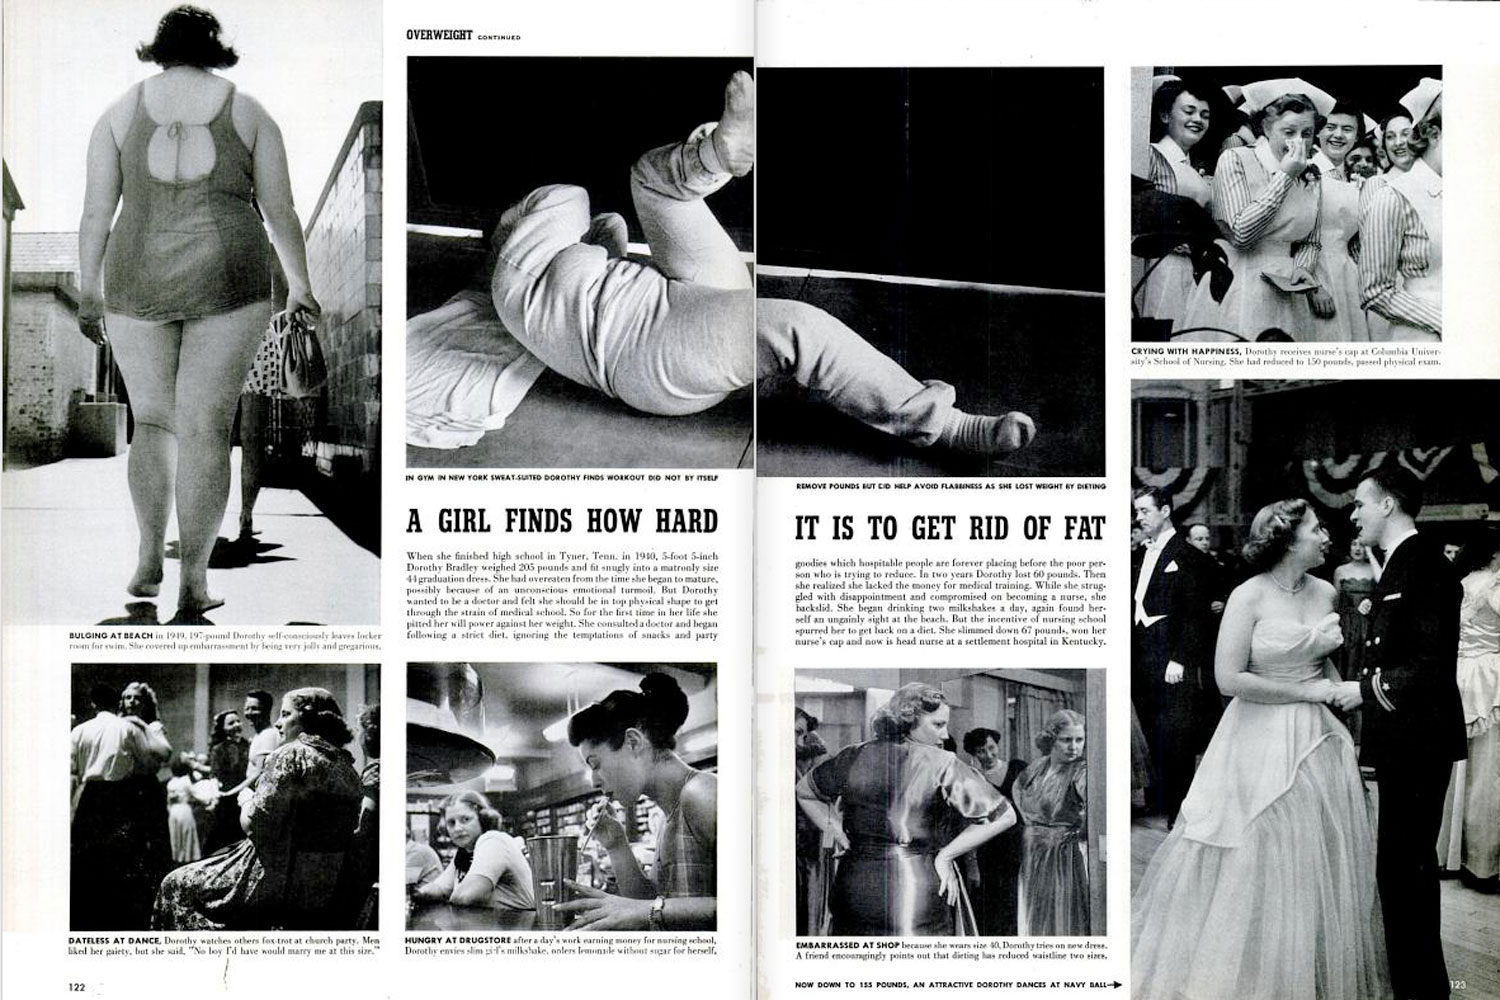 LIFE Magazine, March 8, 1954